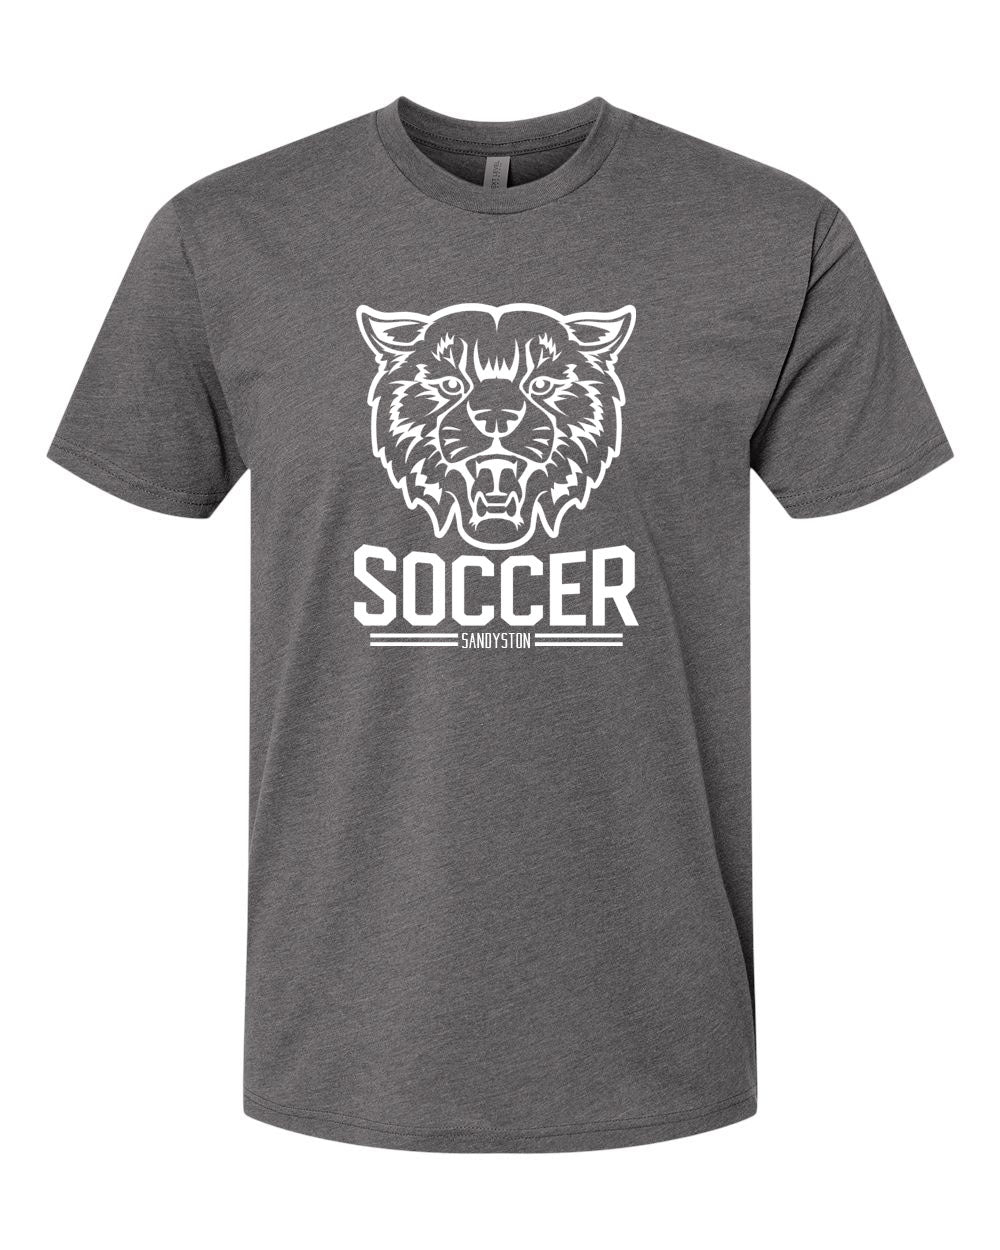 Sandyston Soccer design 5 T-Shirt